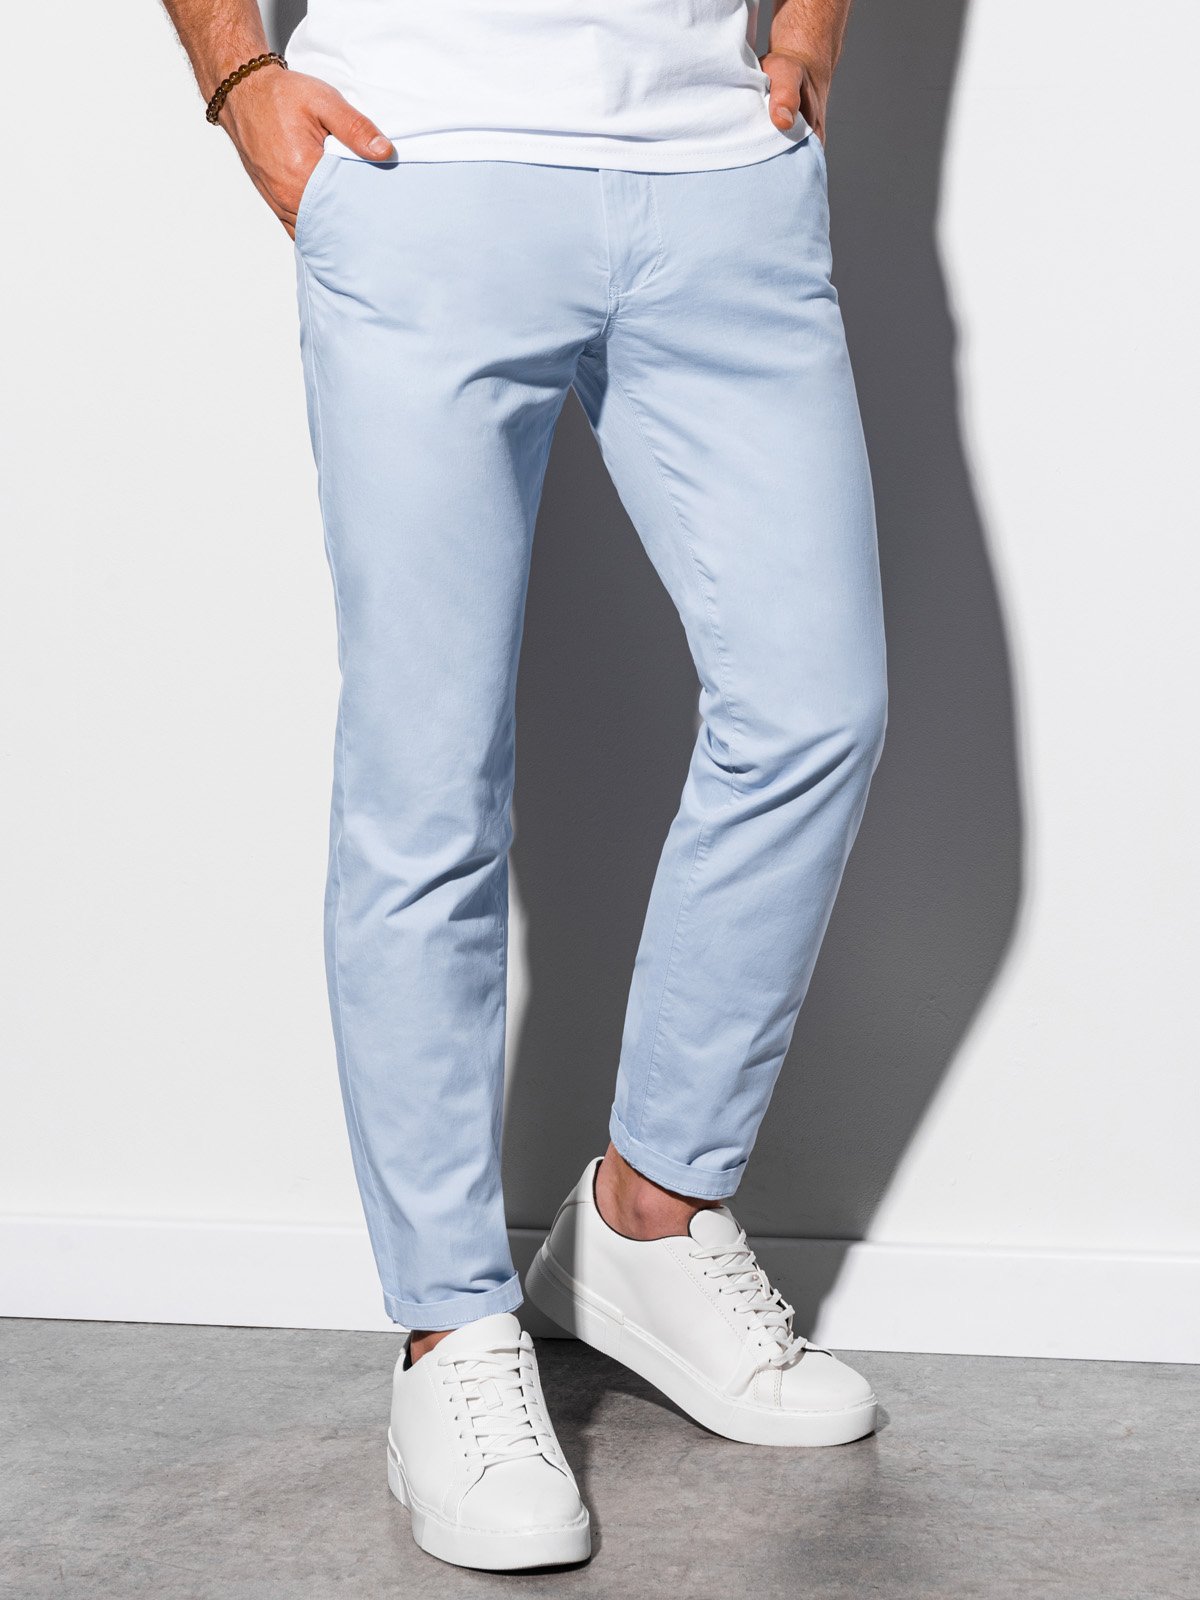 Men's pants chinos P894 - light blue | MODONE wholesale - Clothing For Men